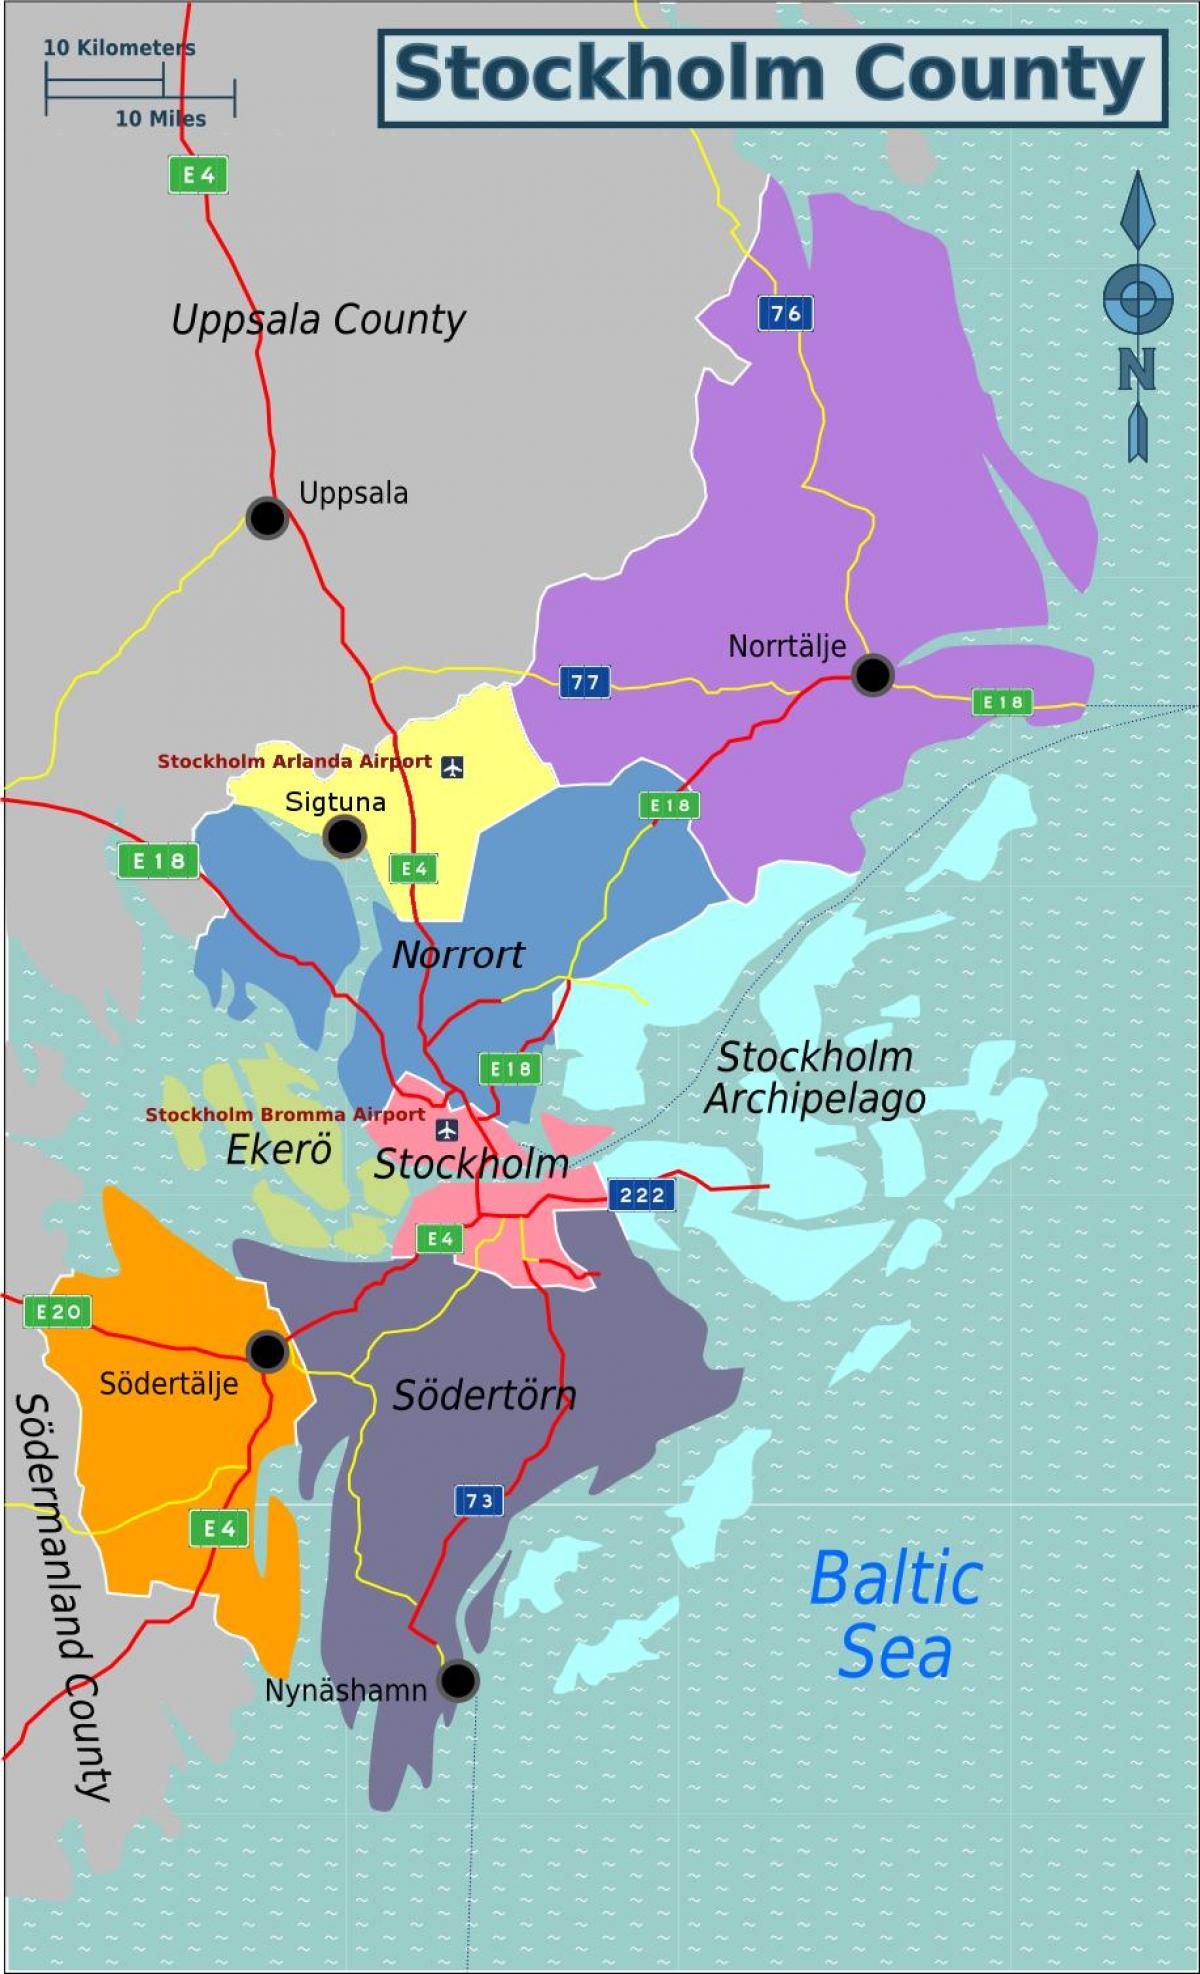 kaart van Stockholm county